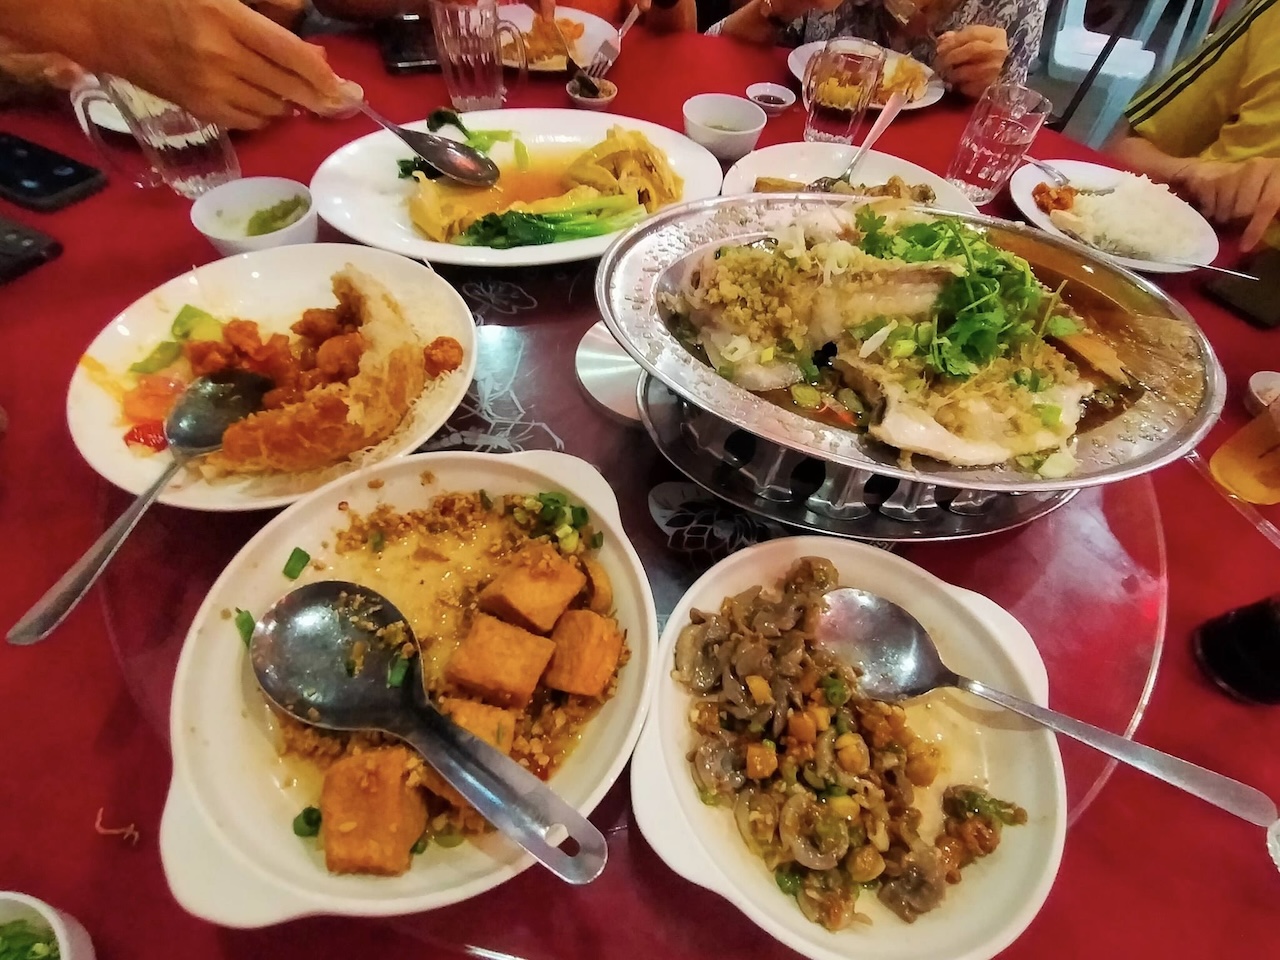 Restoran Yi Sheng Huat Serves Good Food